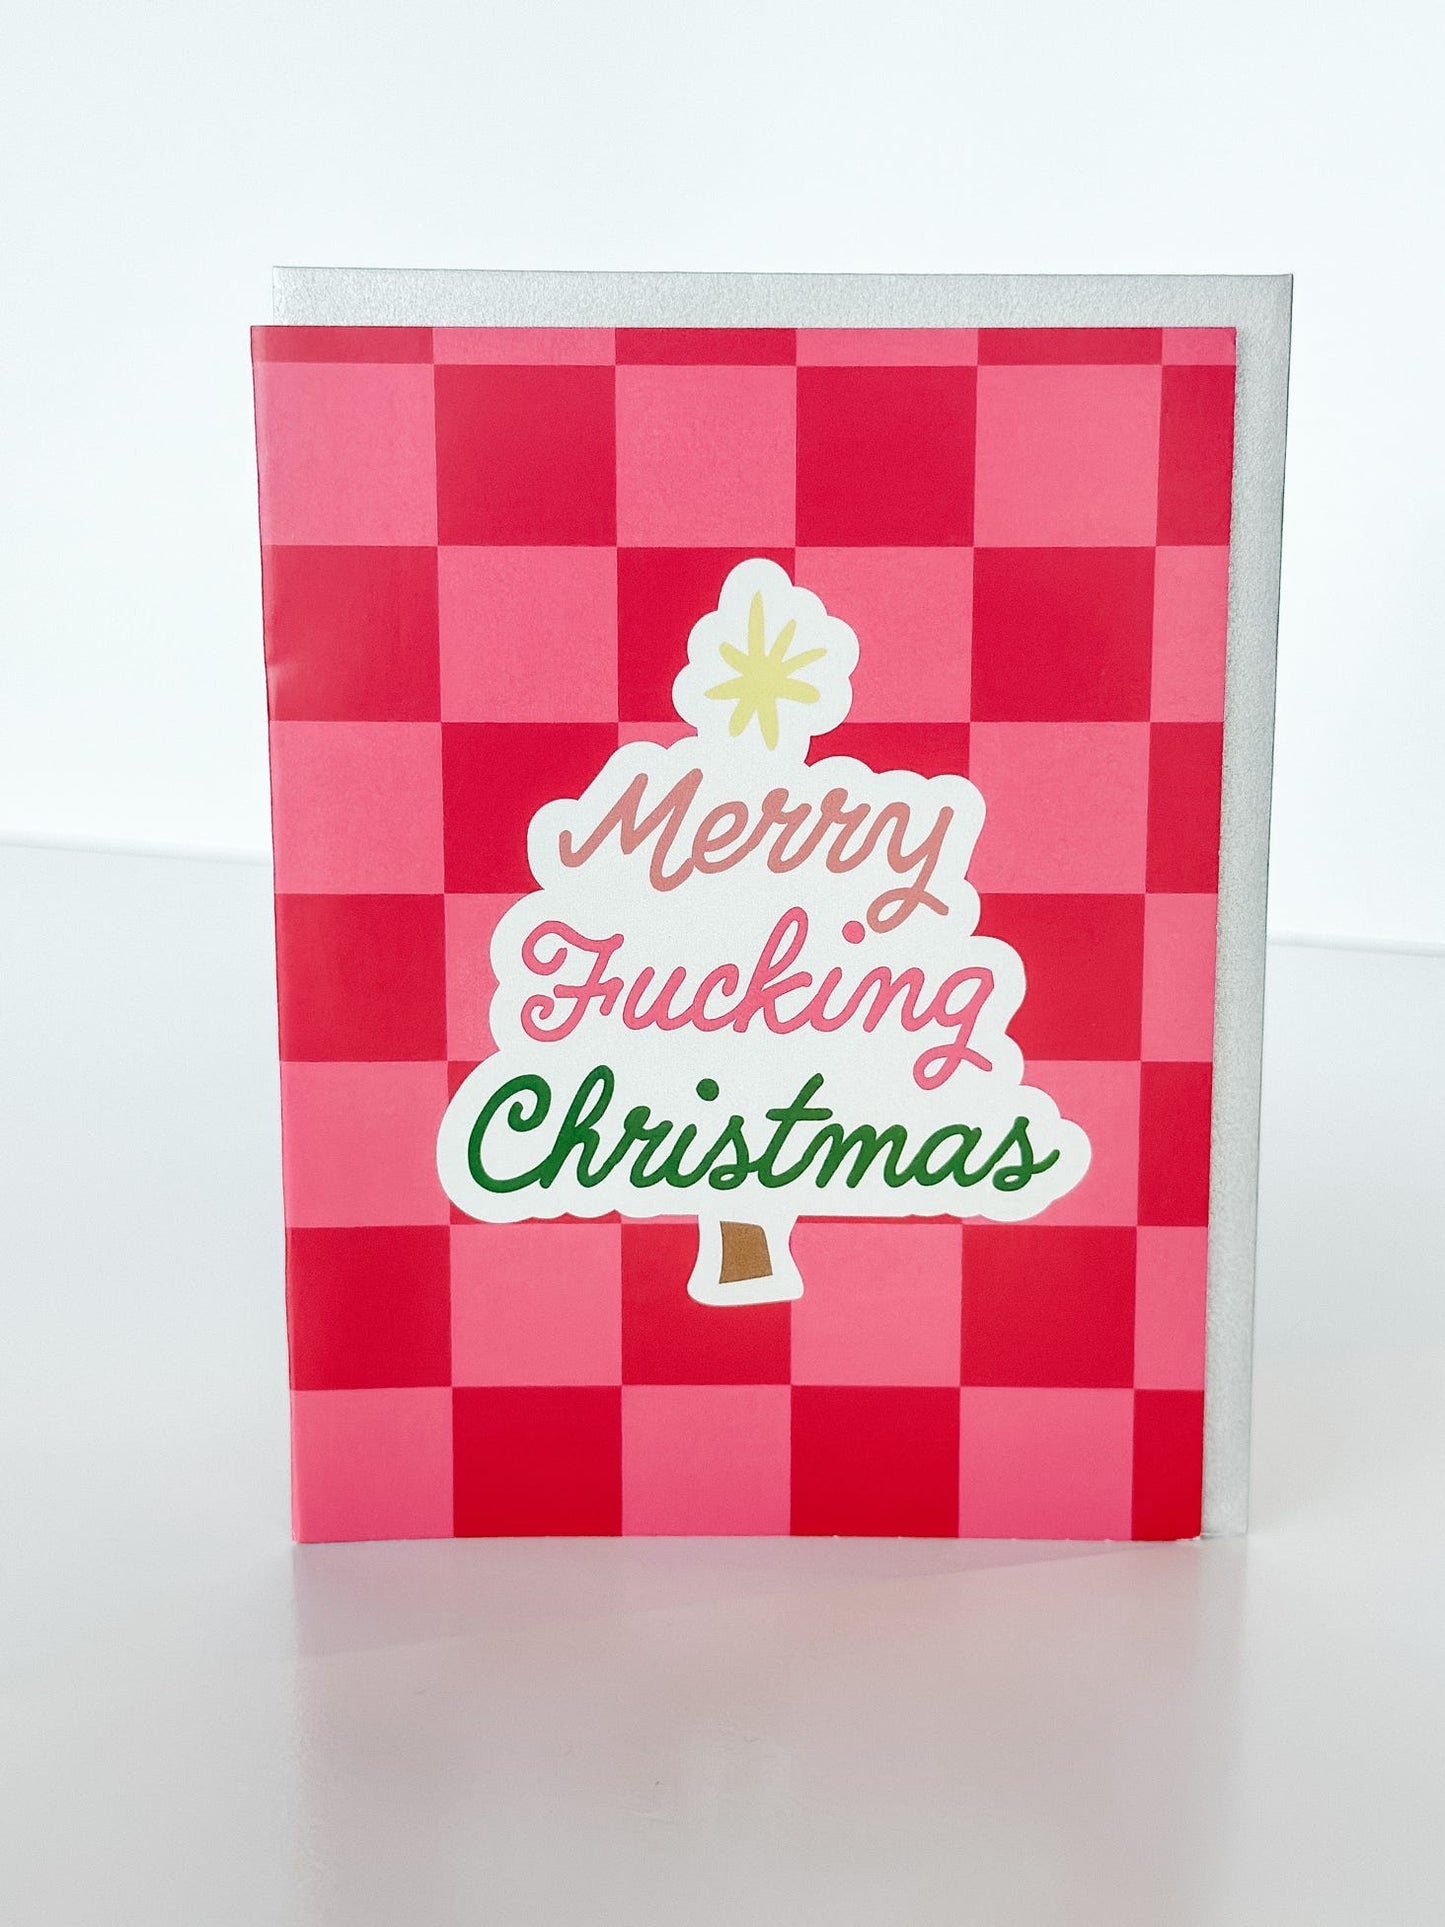 Merry F*cking Christmas Card